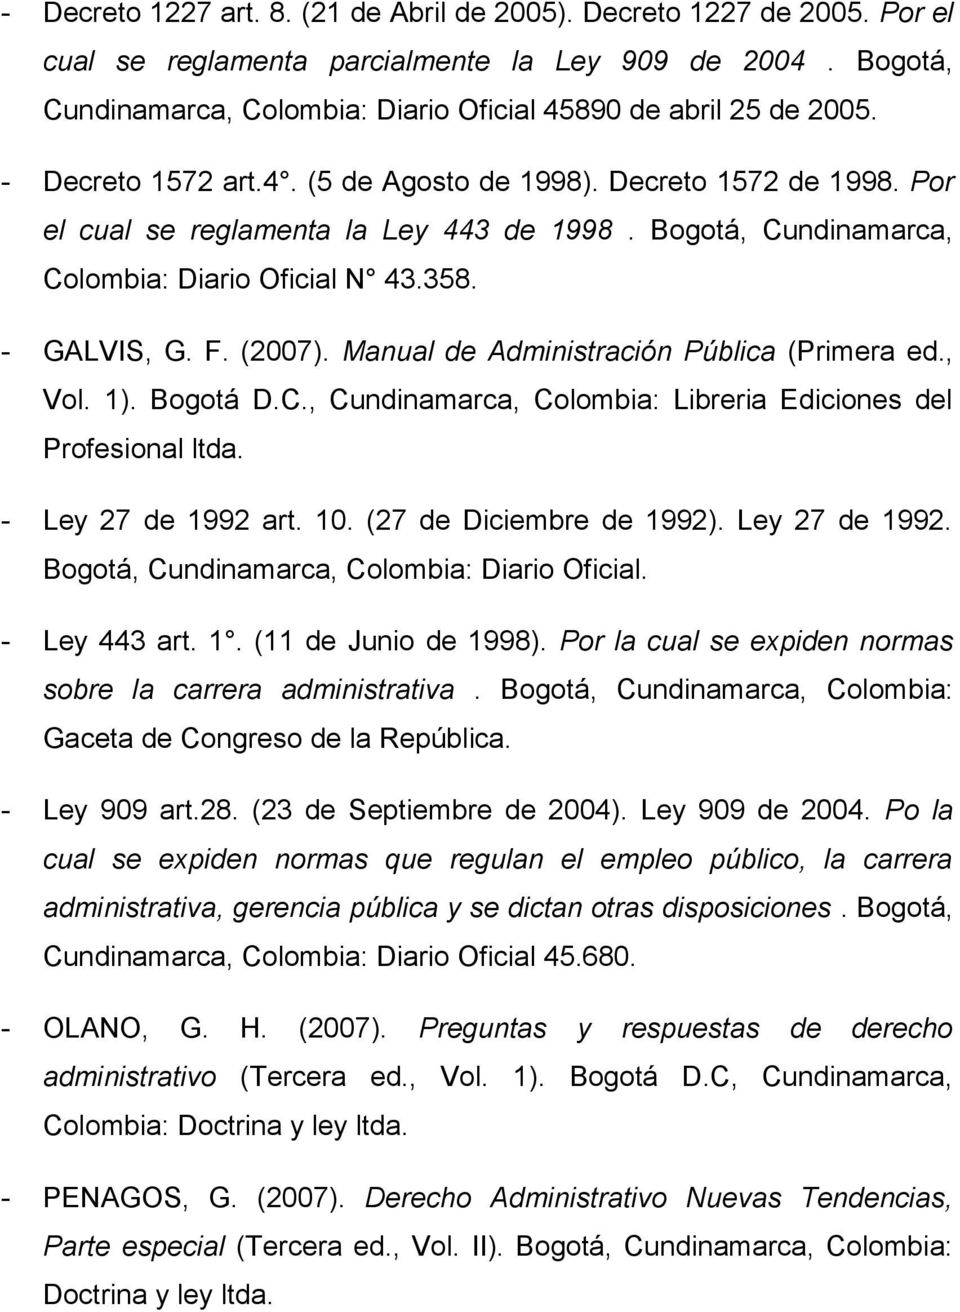 Manual de Administración Pública (Primera ed., Vol. 1). Bogotá D.C., Cundinamarca, Colombia: Libreria Ediciones del Profesional ltda. - Ley 27 de 1992 art. 10. (27 de Diciembre de 1992).